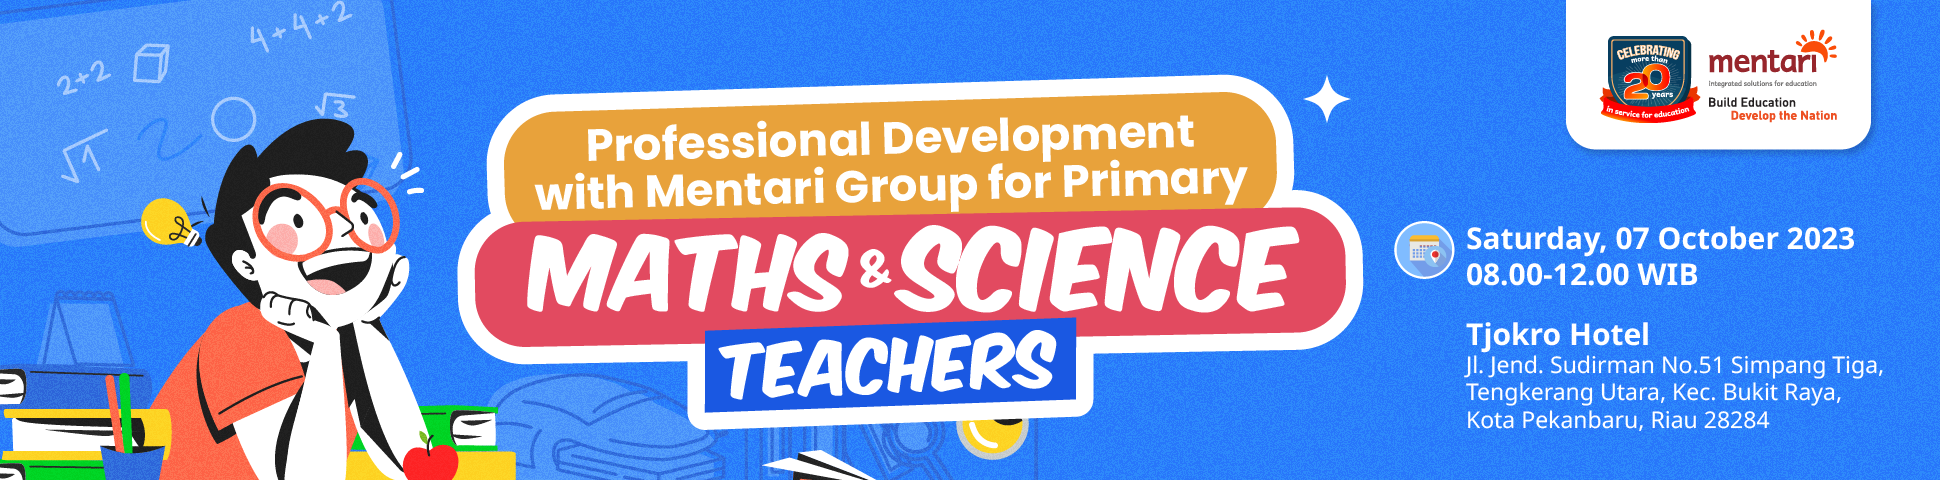 Professional Development Training for Primary Maths and Science Teachers - Pekanbaru